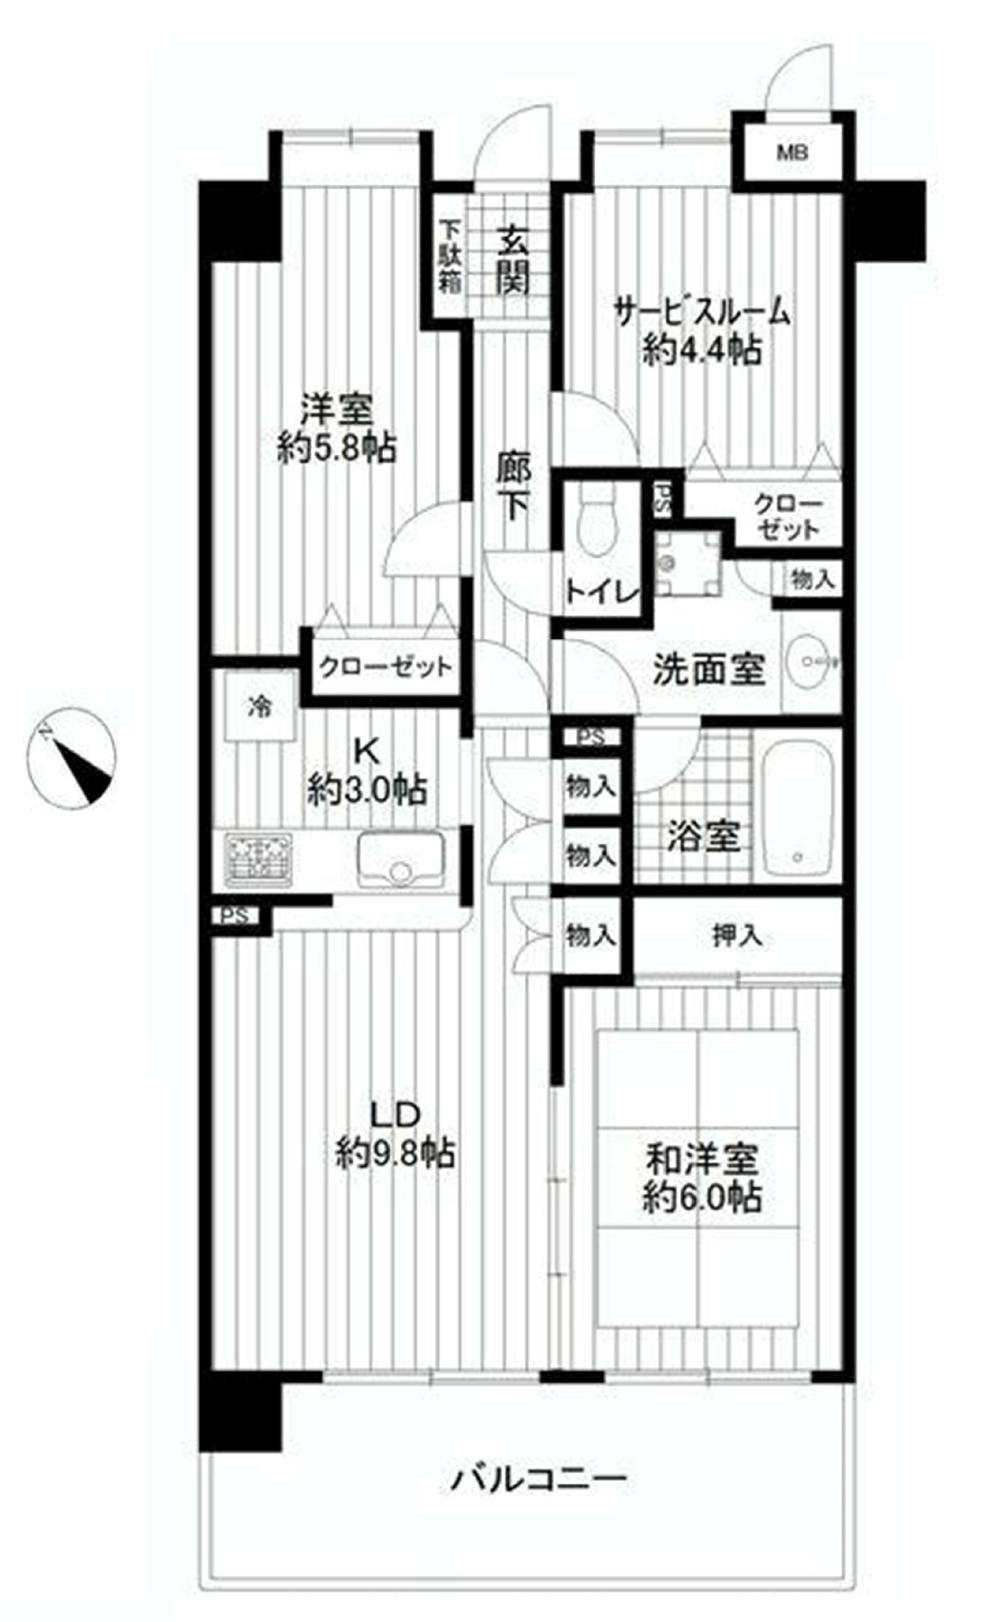 Floor plan. 2LDK + S (storeroom), Price 26,800,000 yen, Footprint 66 sq m , Balcony area 12 sq m ◎ Furnished ◎ renovated